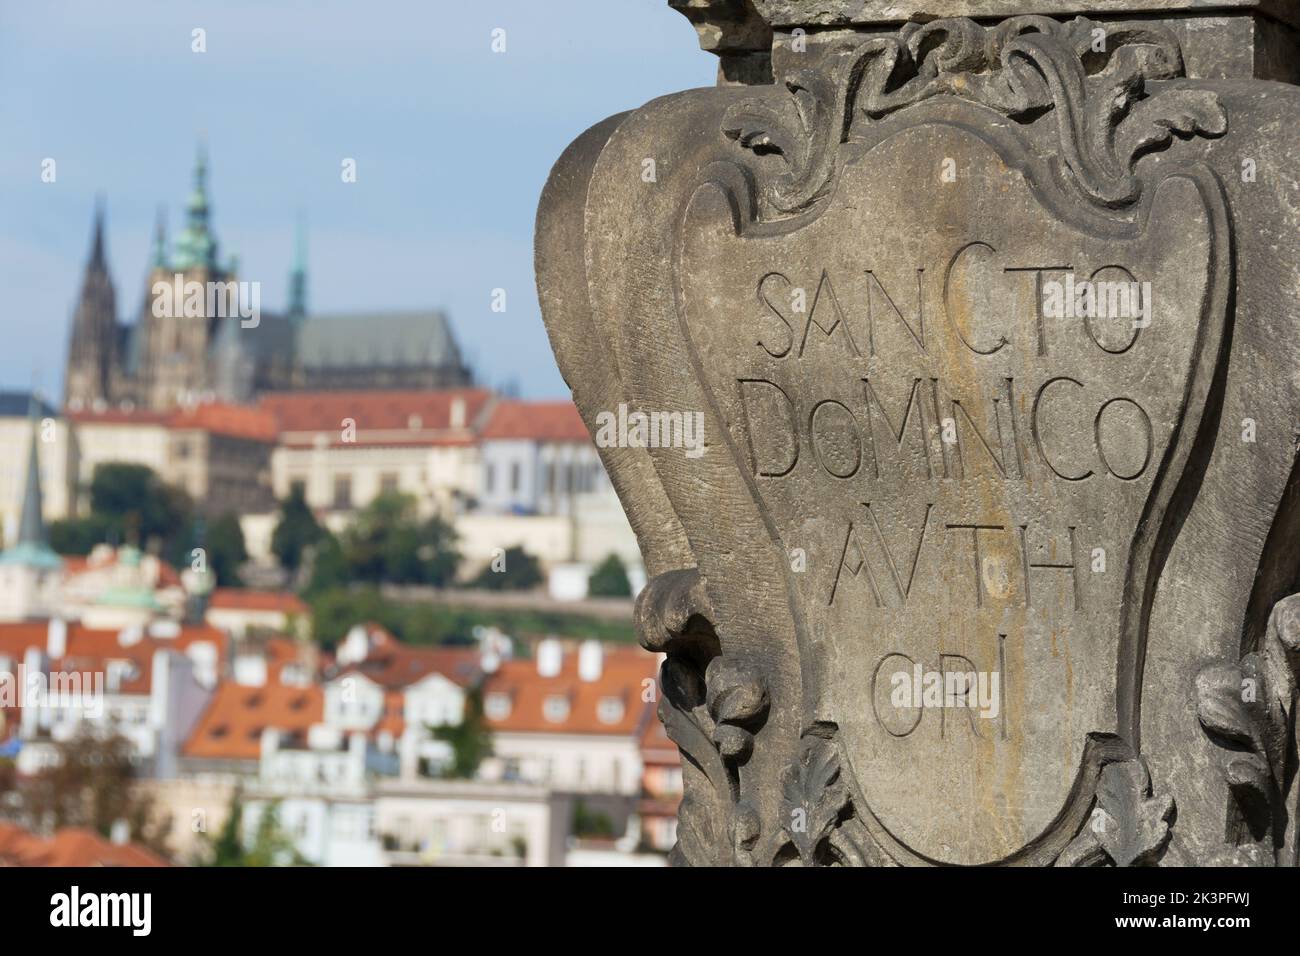 Base inscription: Sancto dominico avth ori on Prague's Charles Bridge and Prague Castle in the background Stock Photo